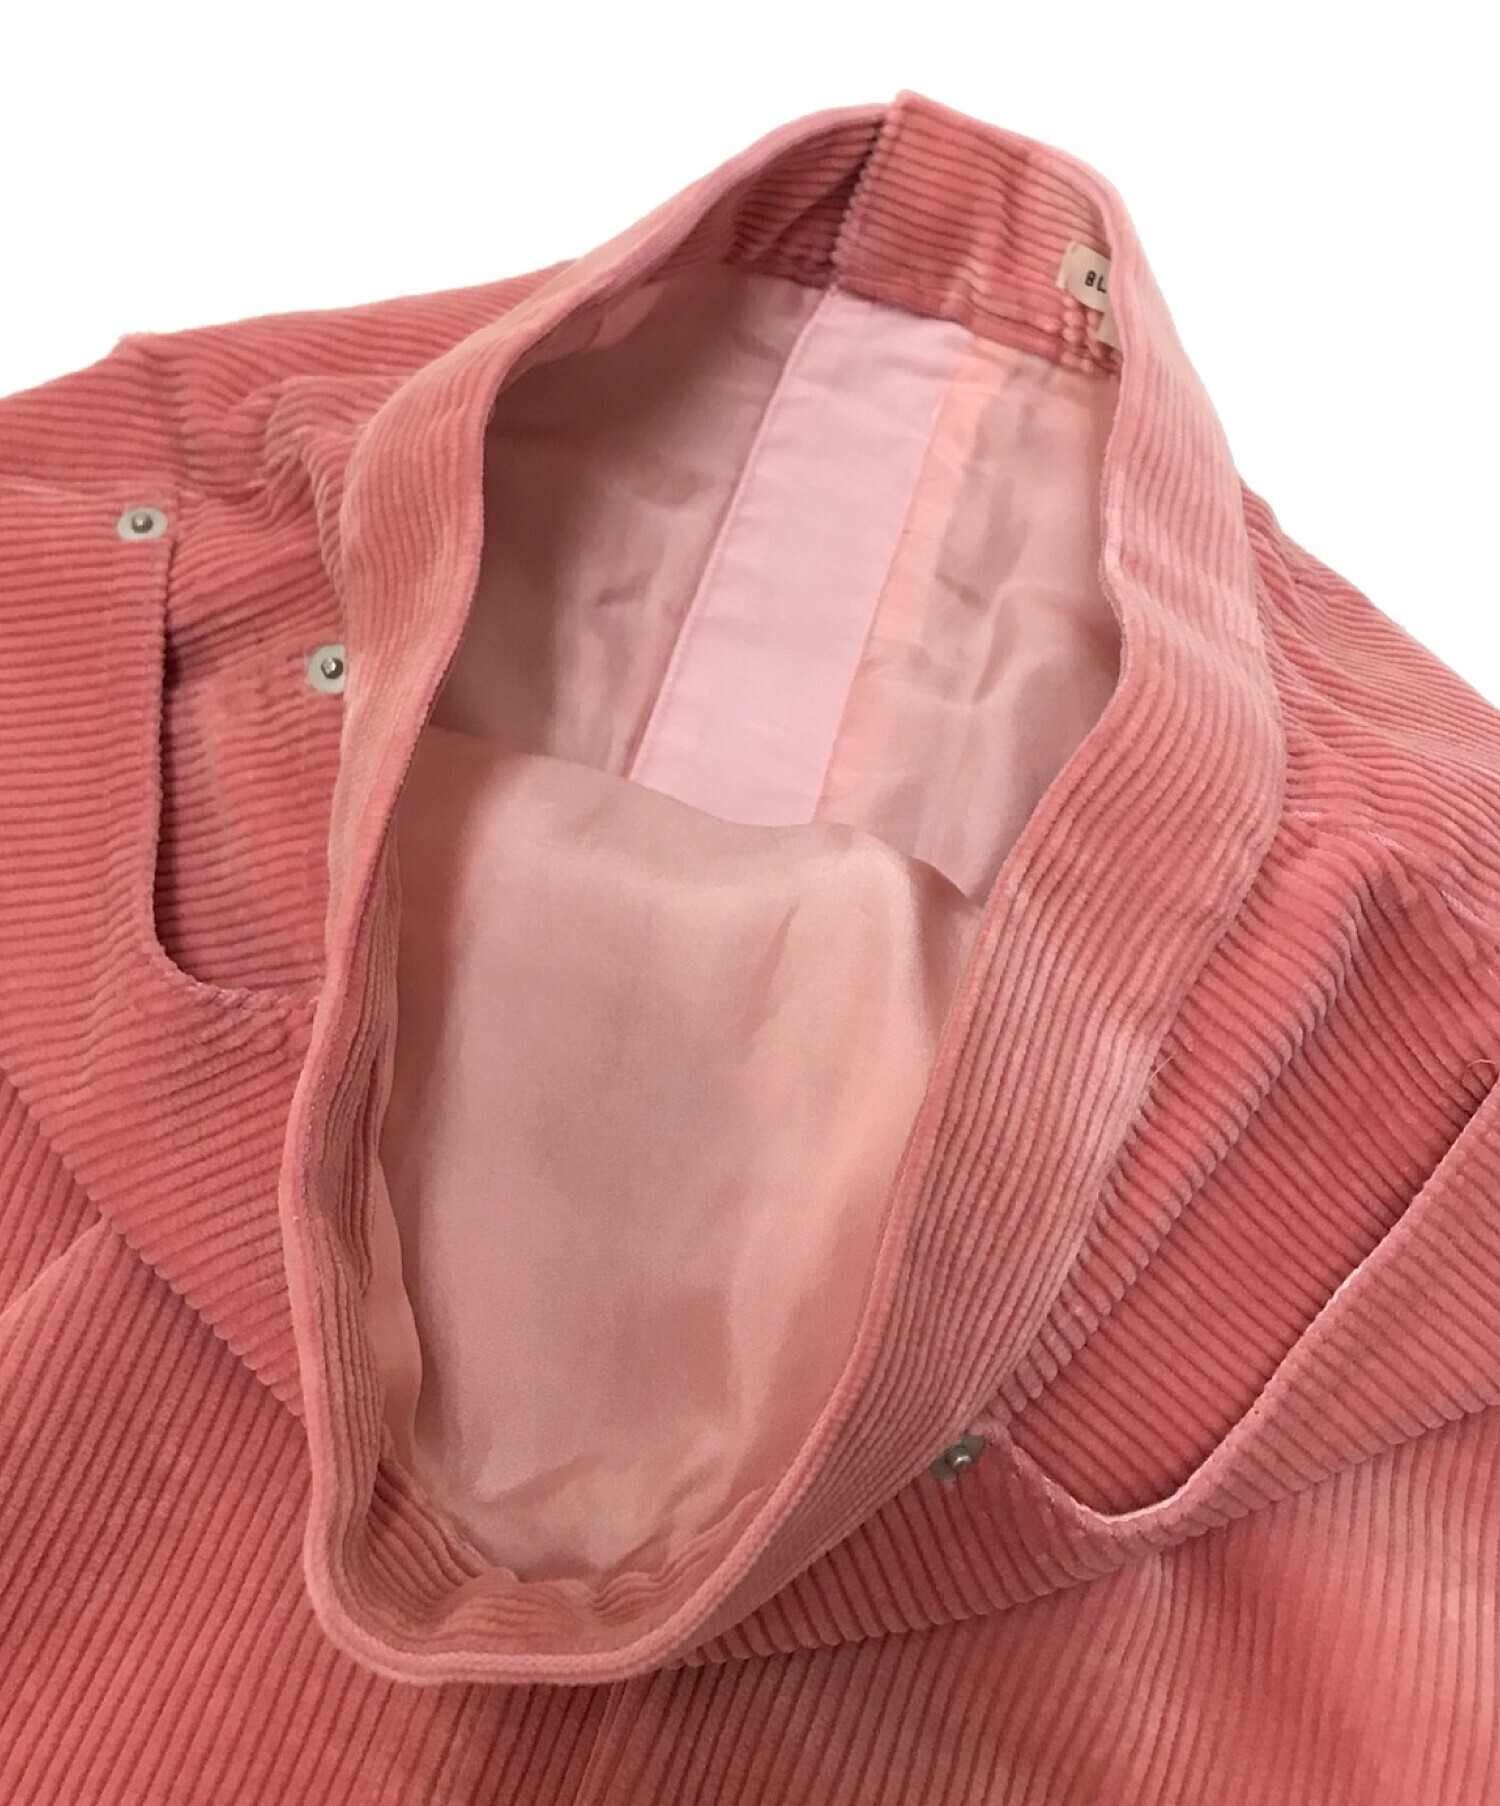 BLAMINK (ブラミンク) コーデュロイスカート ピンク サイズ:36